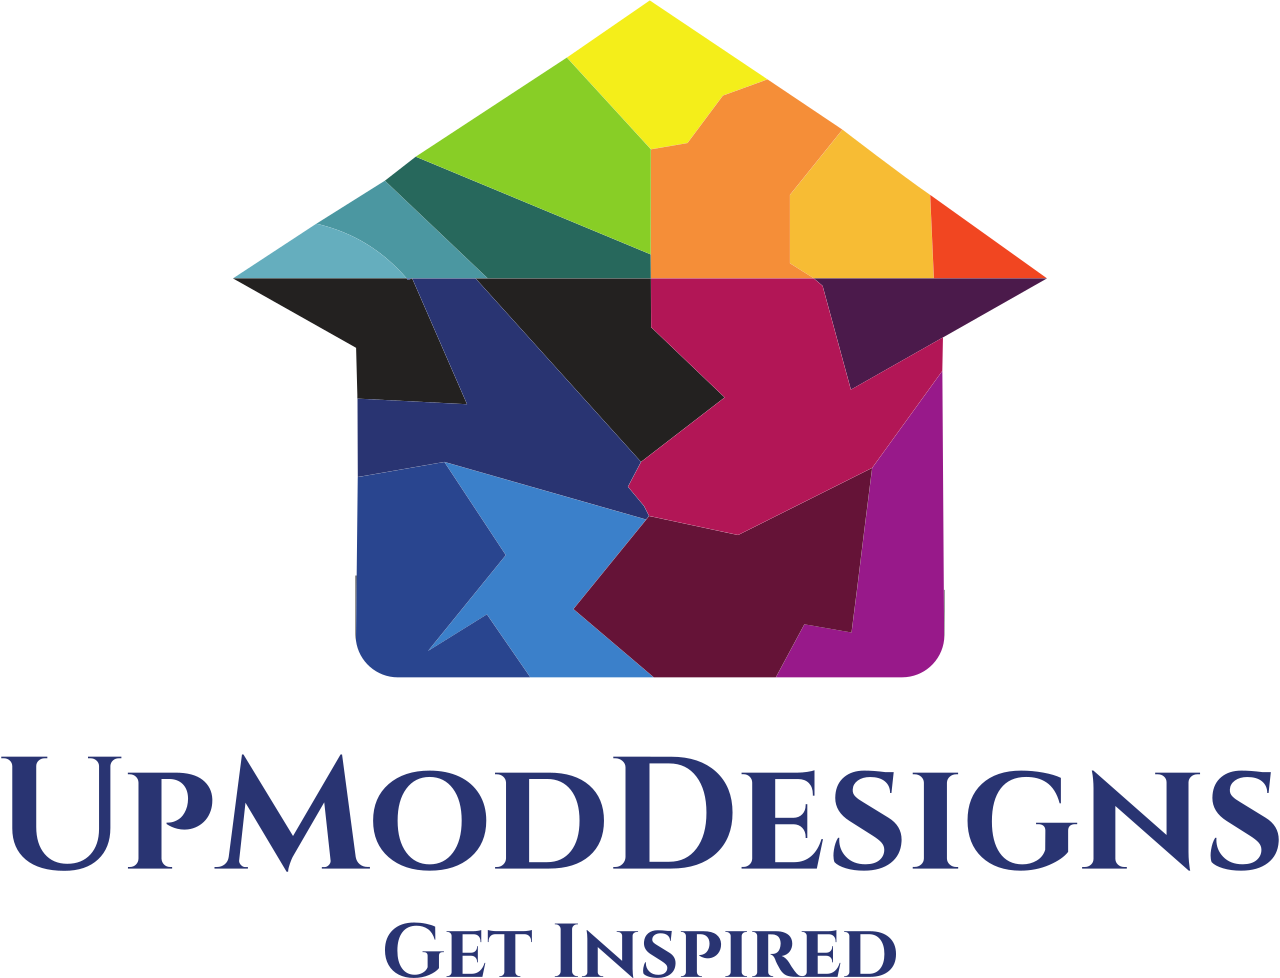 UpModDesigns's logo